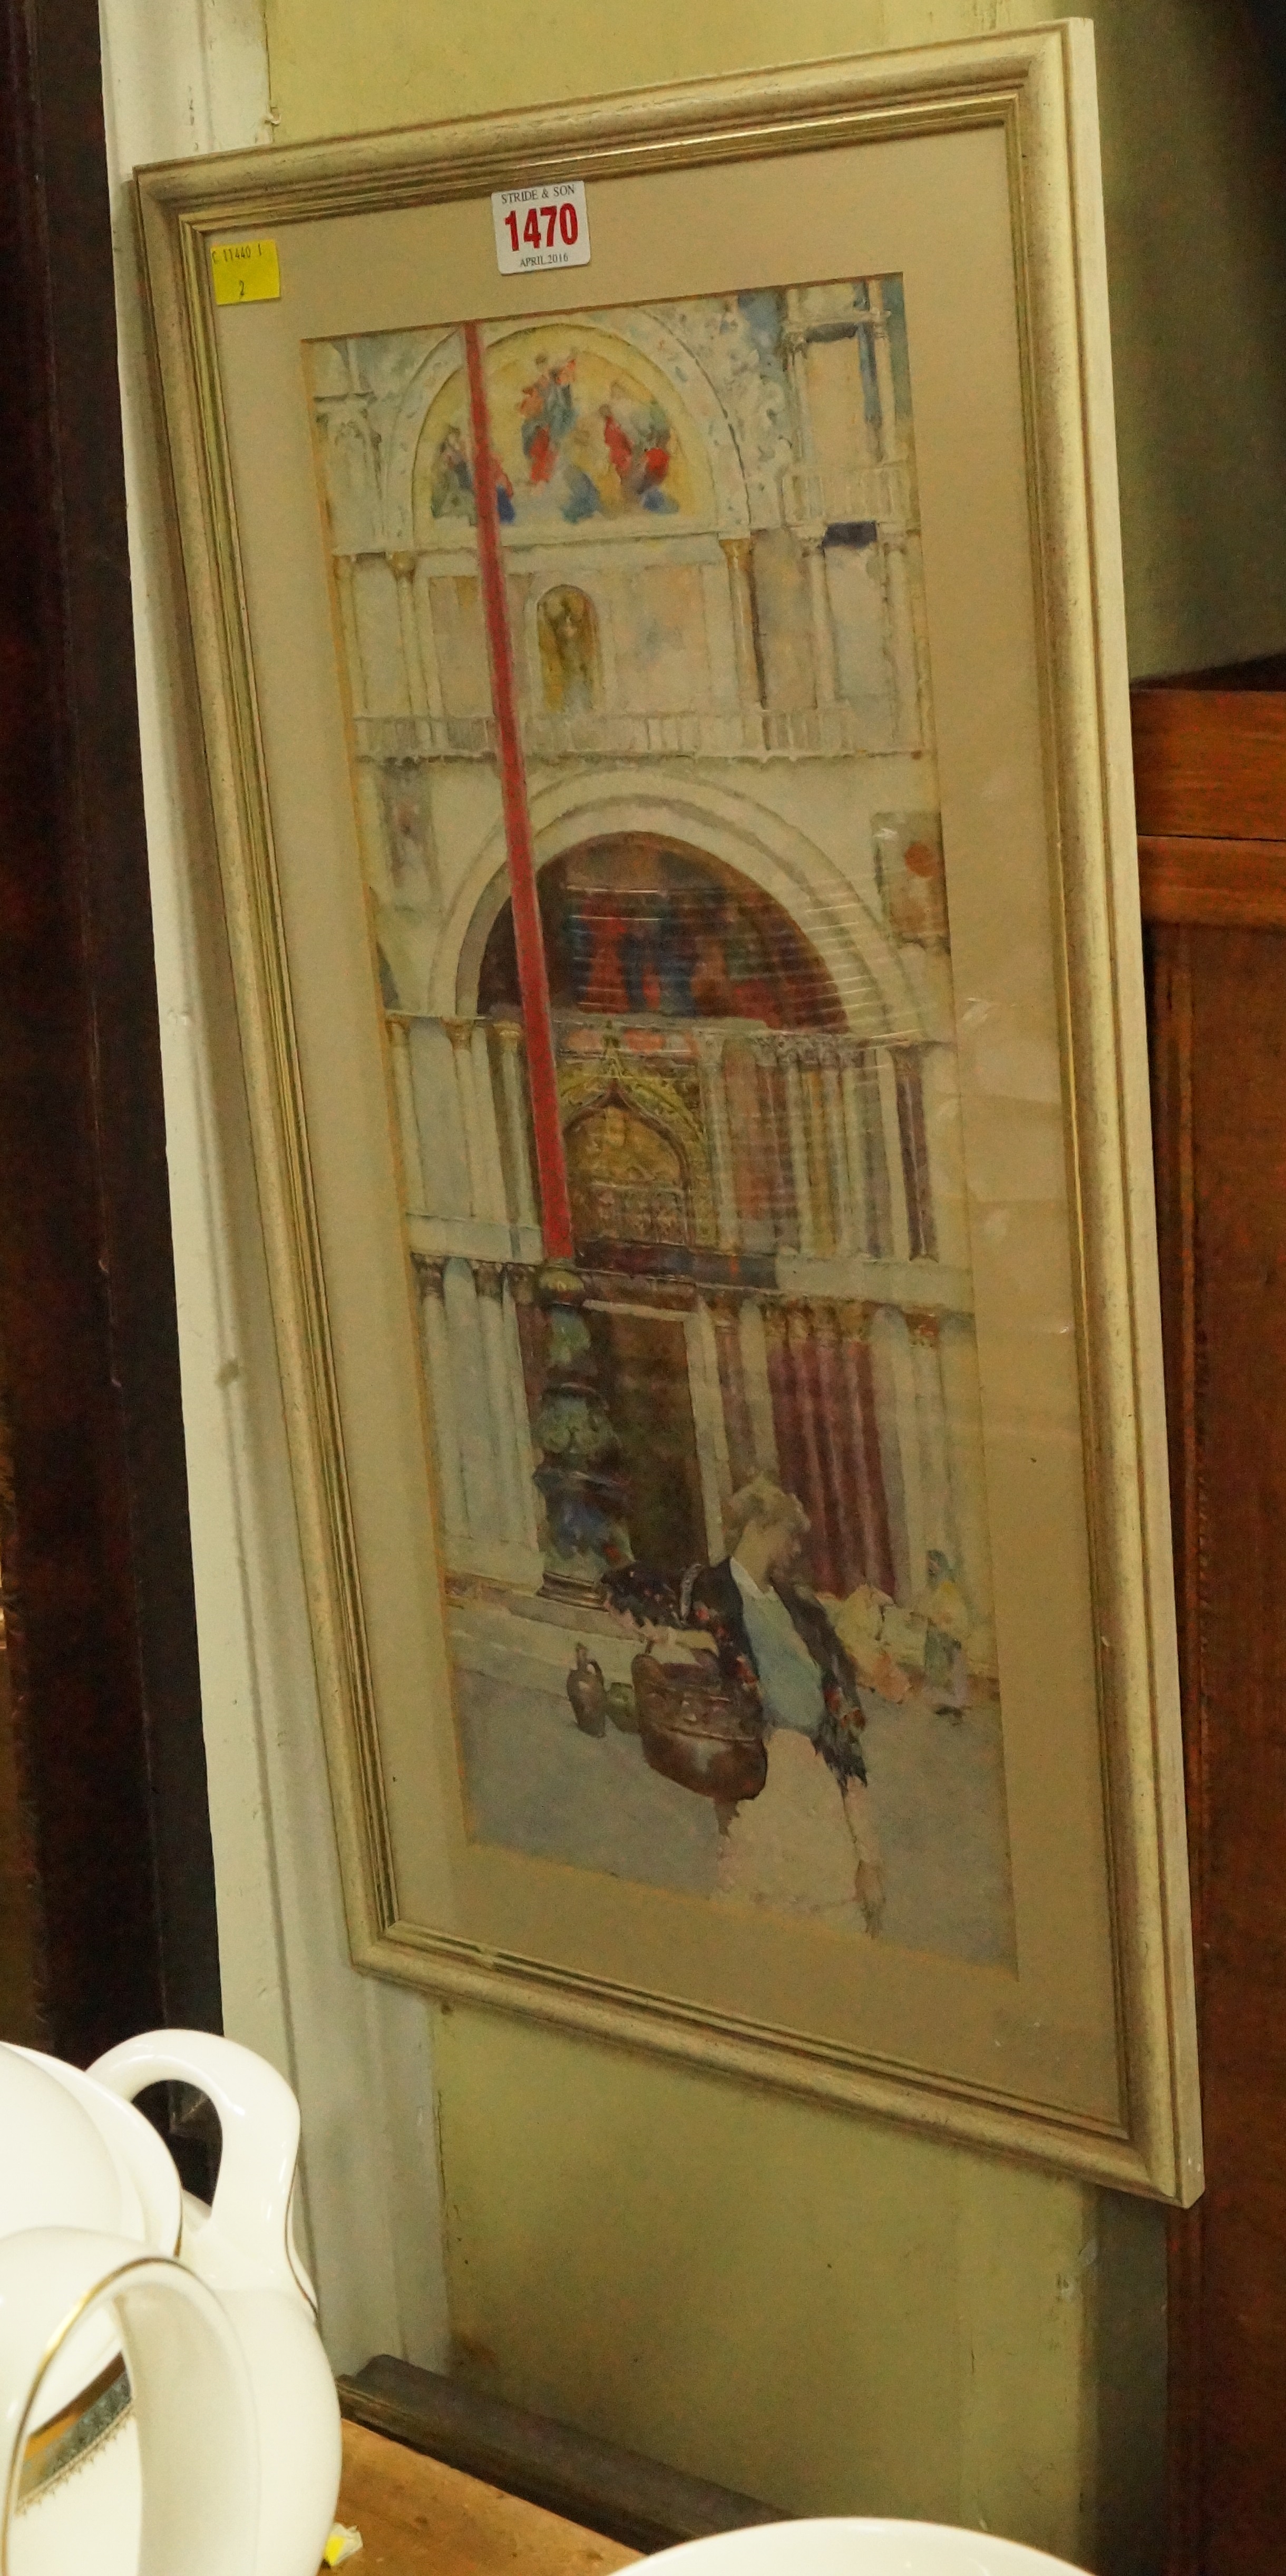 David Woodlock, 'St Mark's Square,Venice', signed, watercolour, 46.5 x 20cm. - Image 3 of 6